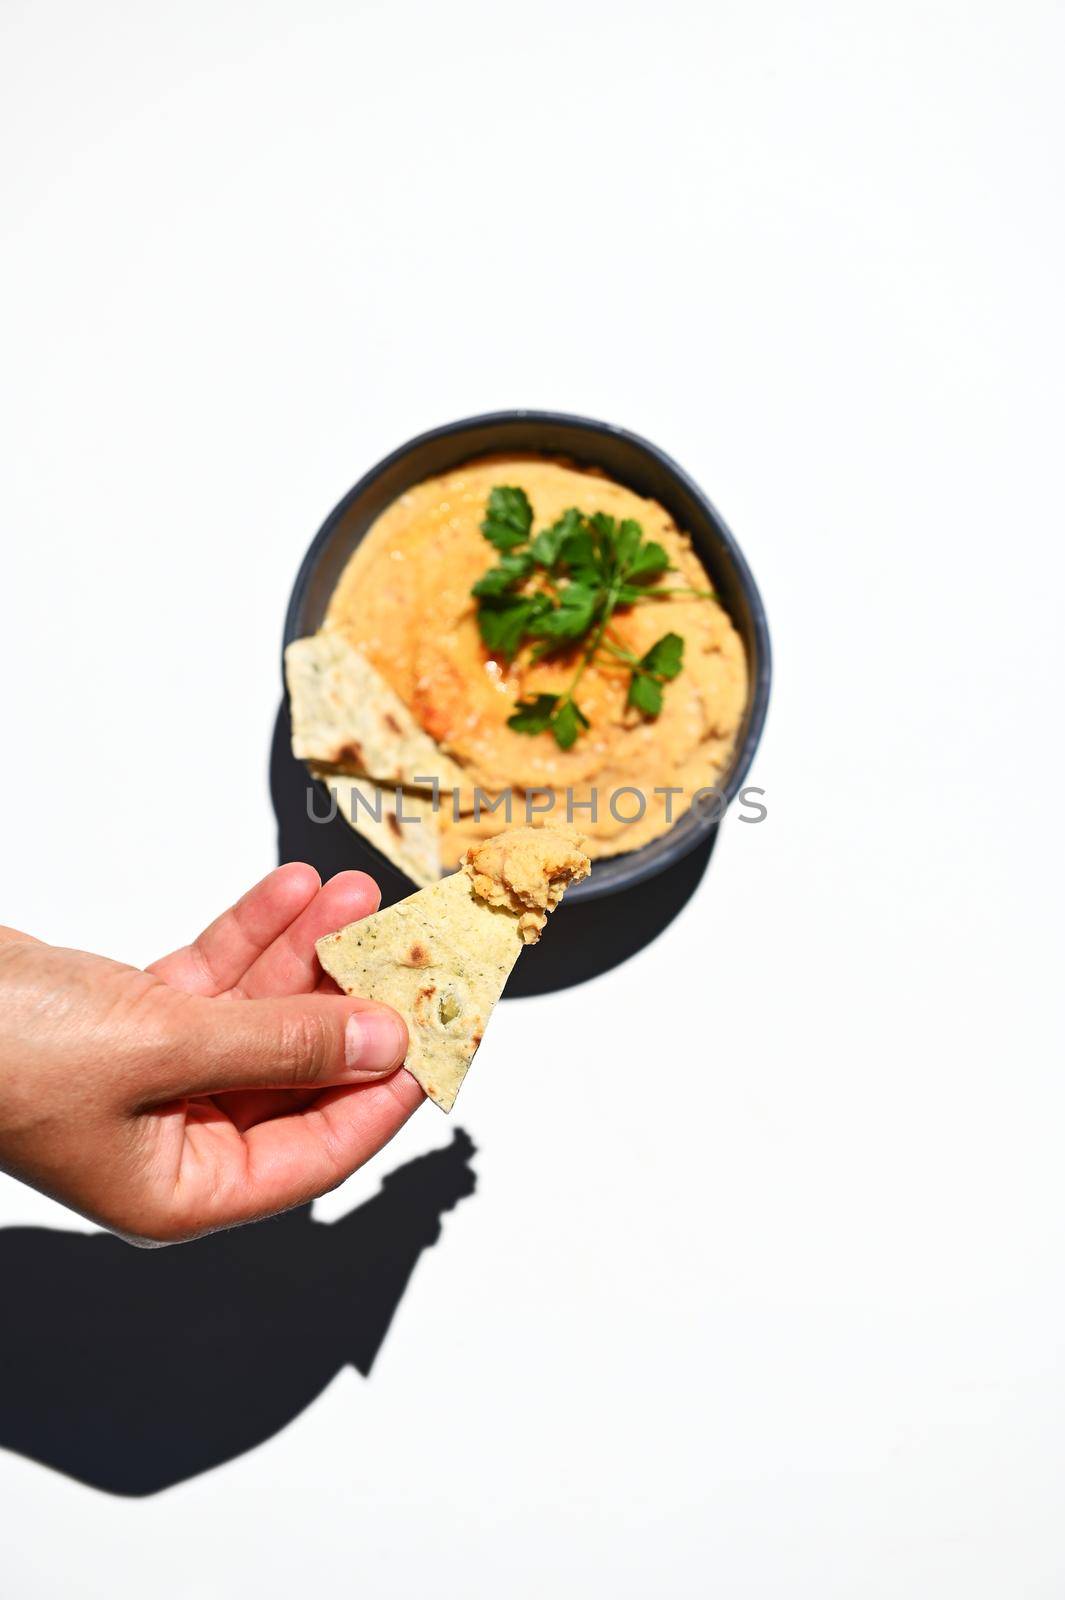 Vertical studio shot of hand, dipping pita bread into a creamy consistency vegan dish - oriental hummus. White backdrop by artgf